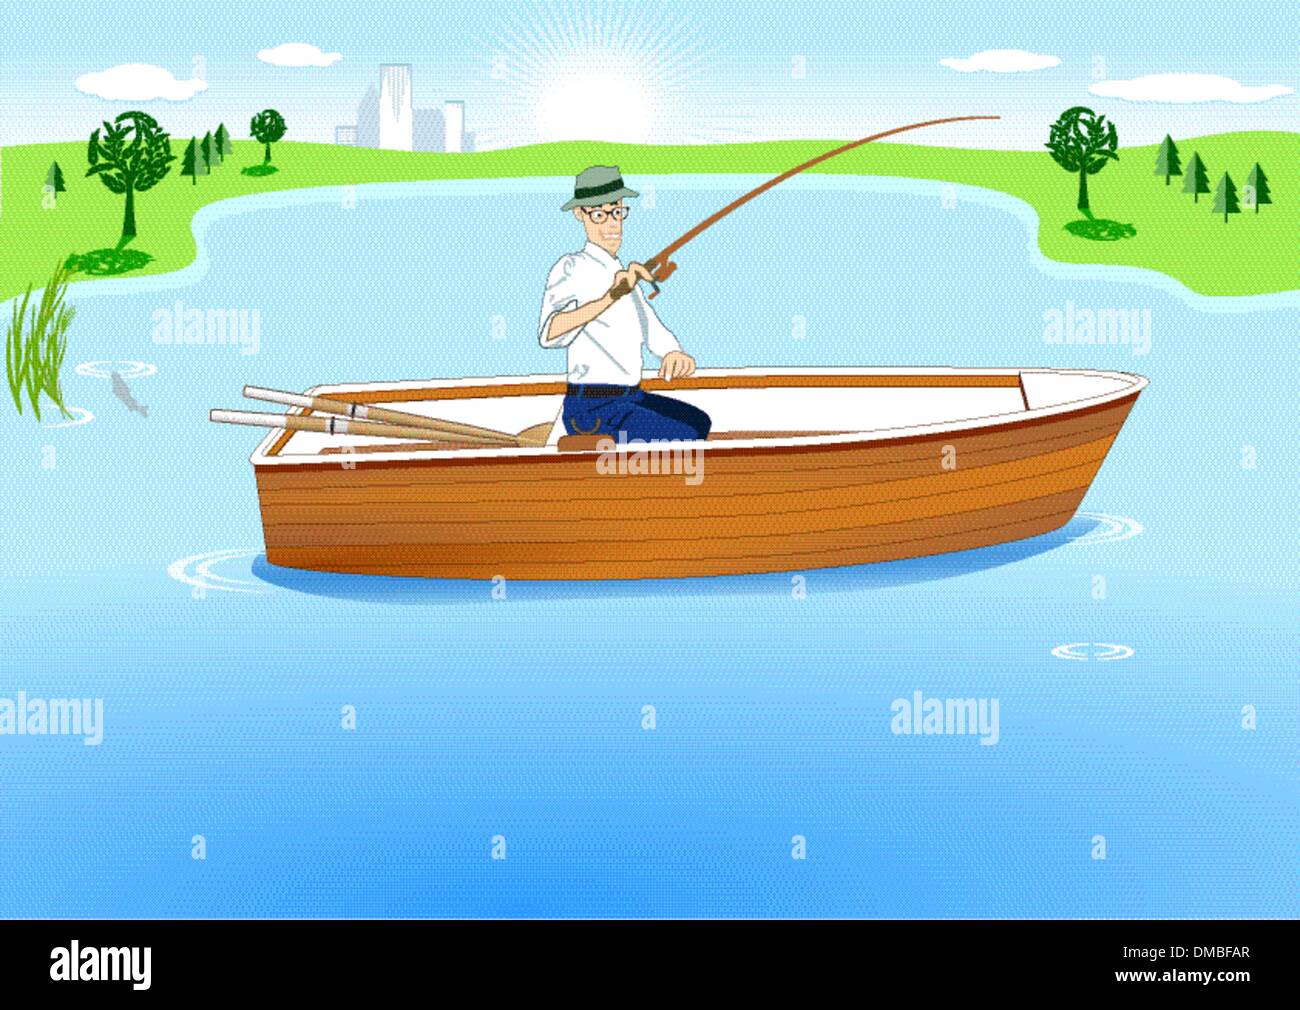 https://c8.alamy.com/comp/DMBFAR/fishing-in-boat-DMBFAR.jpg